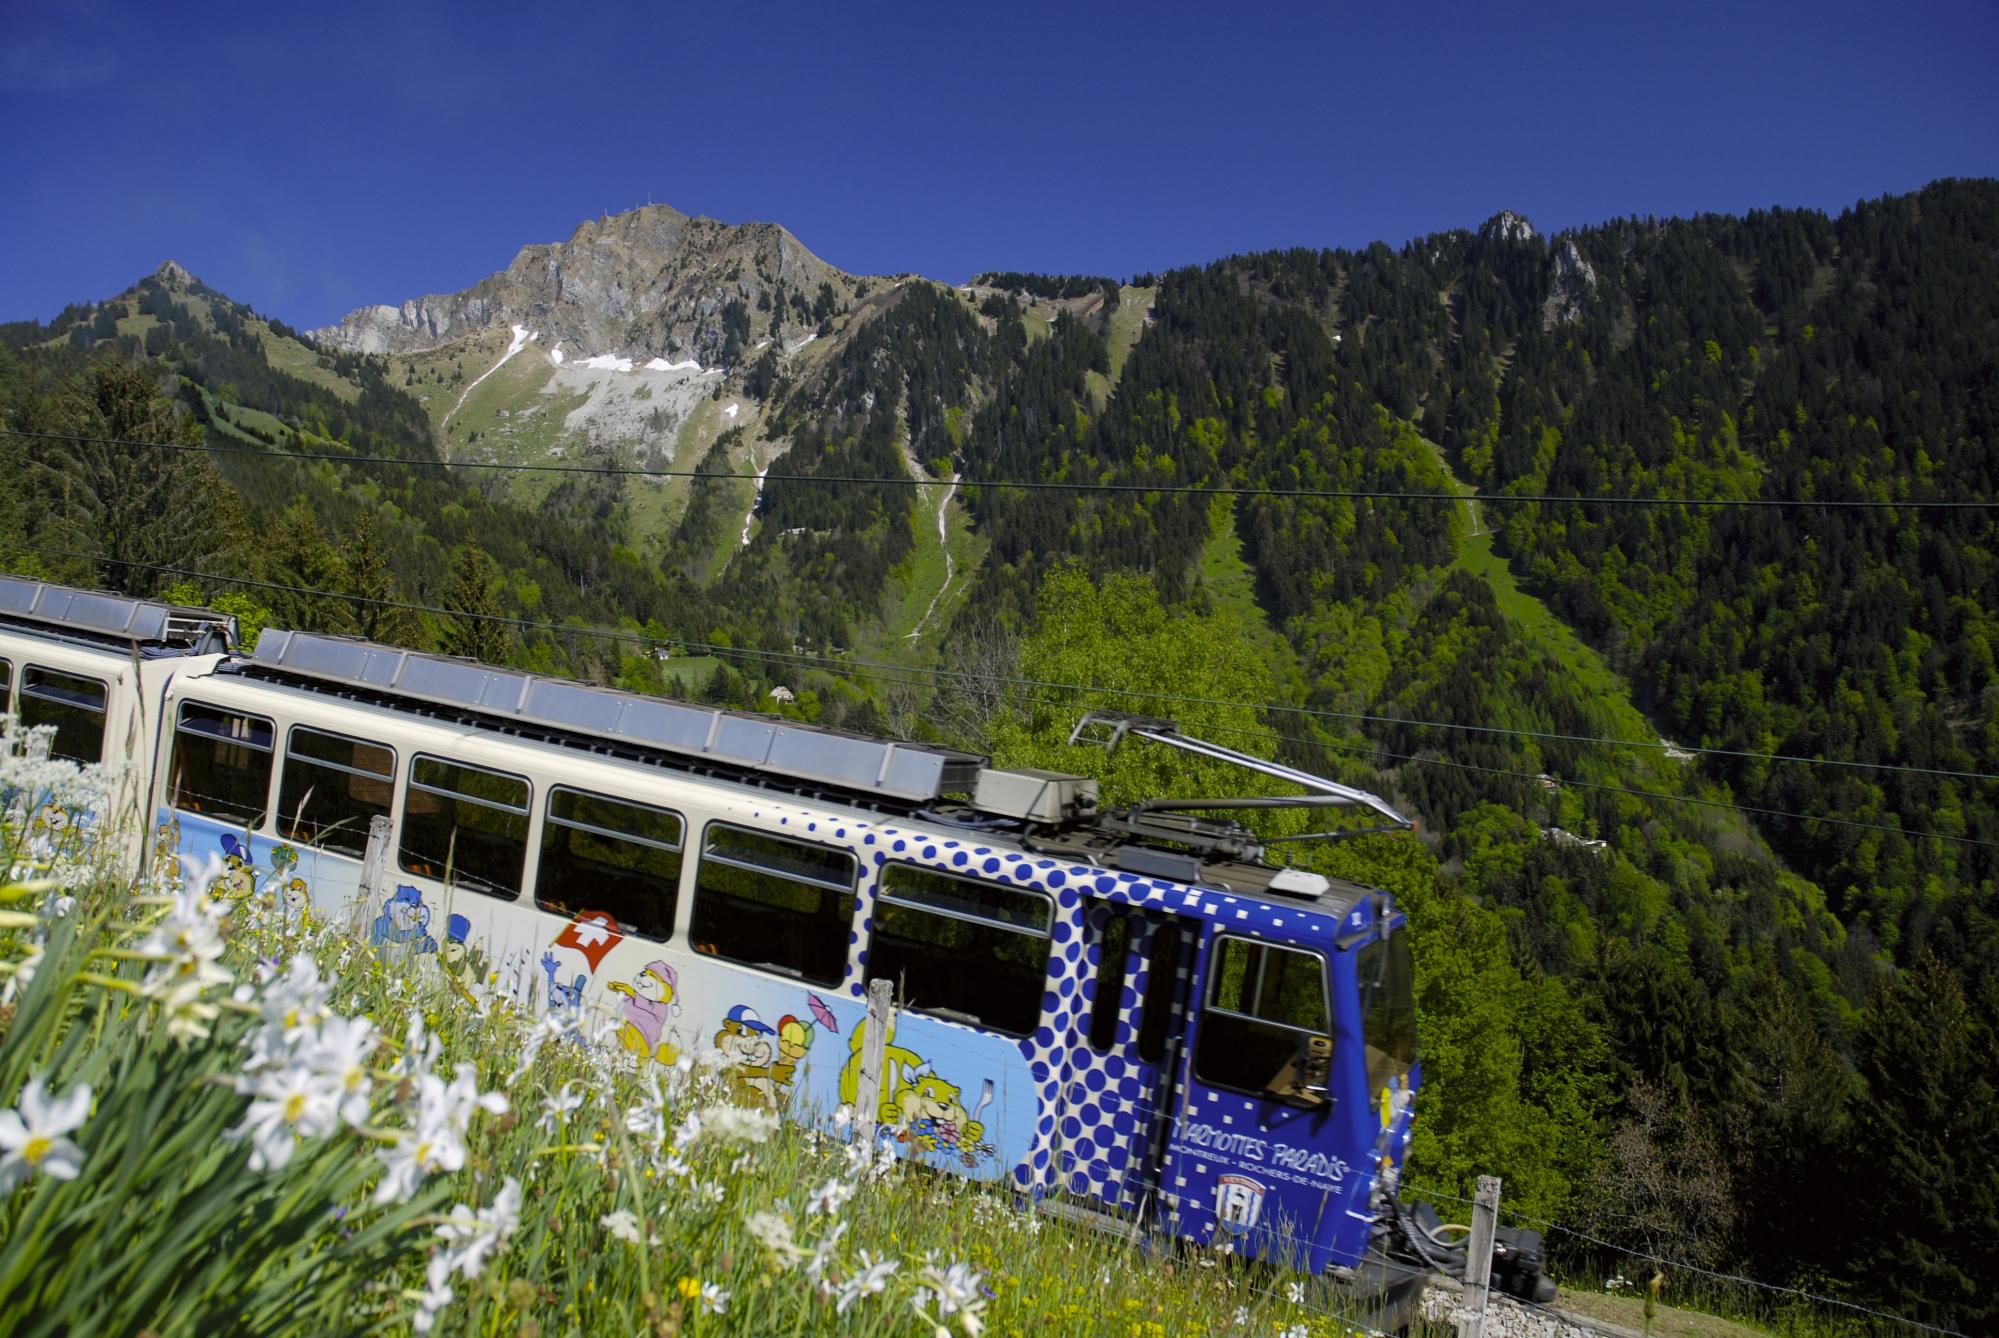 The cog railway Montreux - Rochers-de-Naye